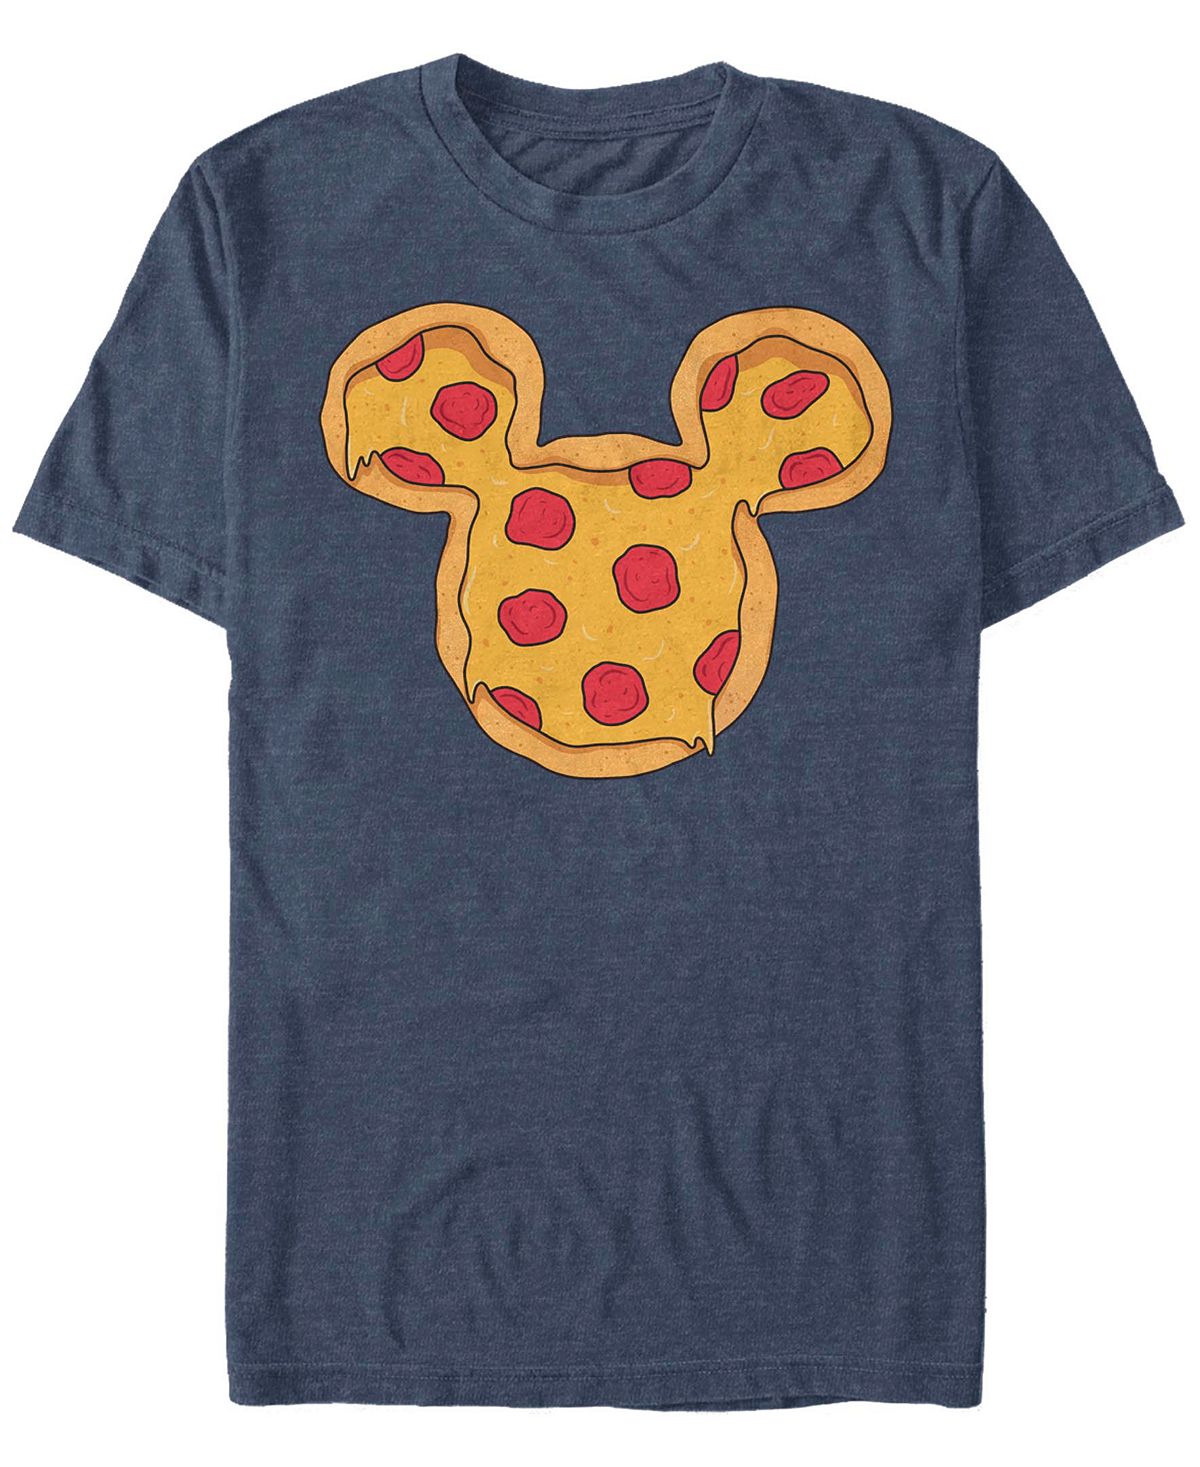 Мужская футболка с короткими рукавами mickey pizza ears Fifth Sun, синий мужская классическая футболка с короткими рукавами mickey hello darling fifth sun черный